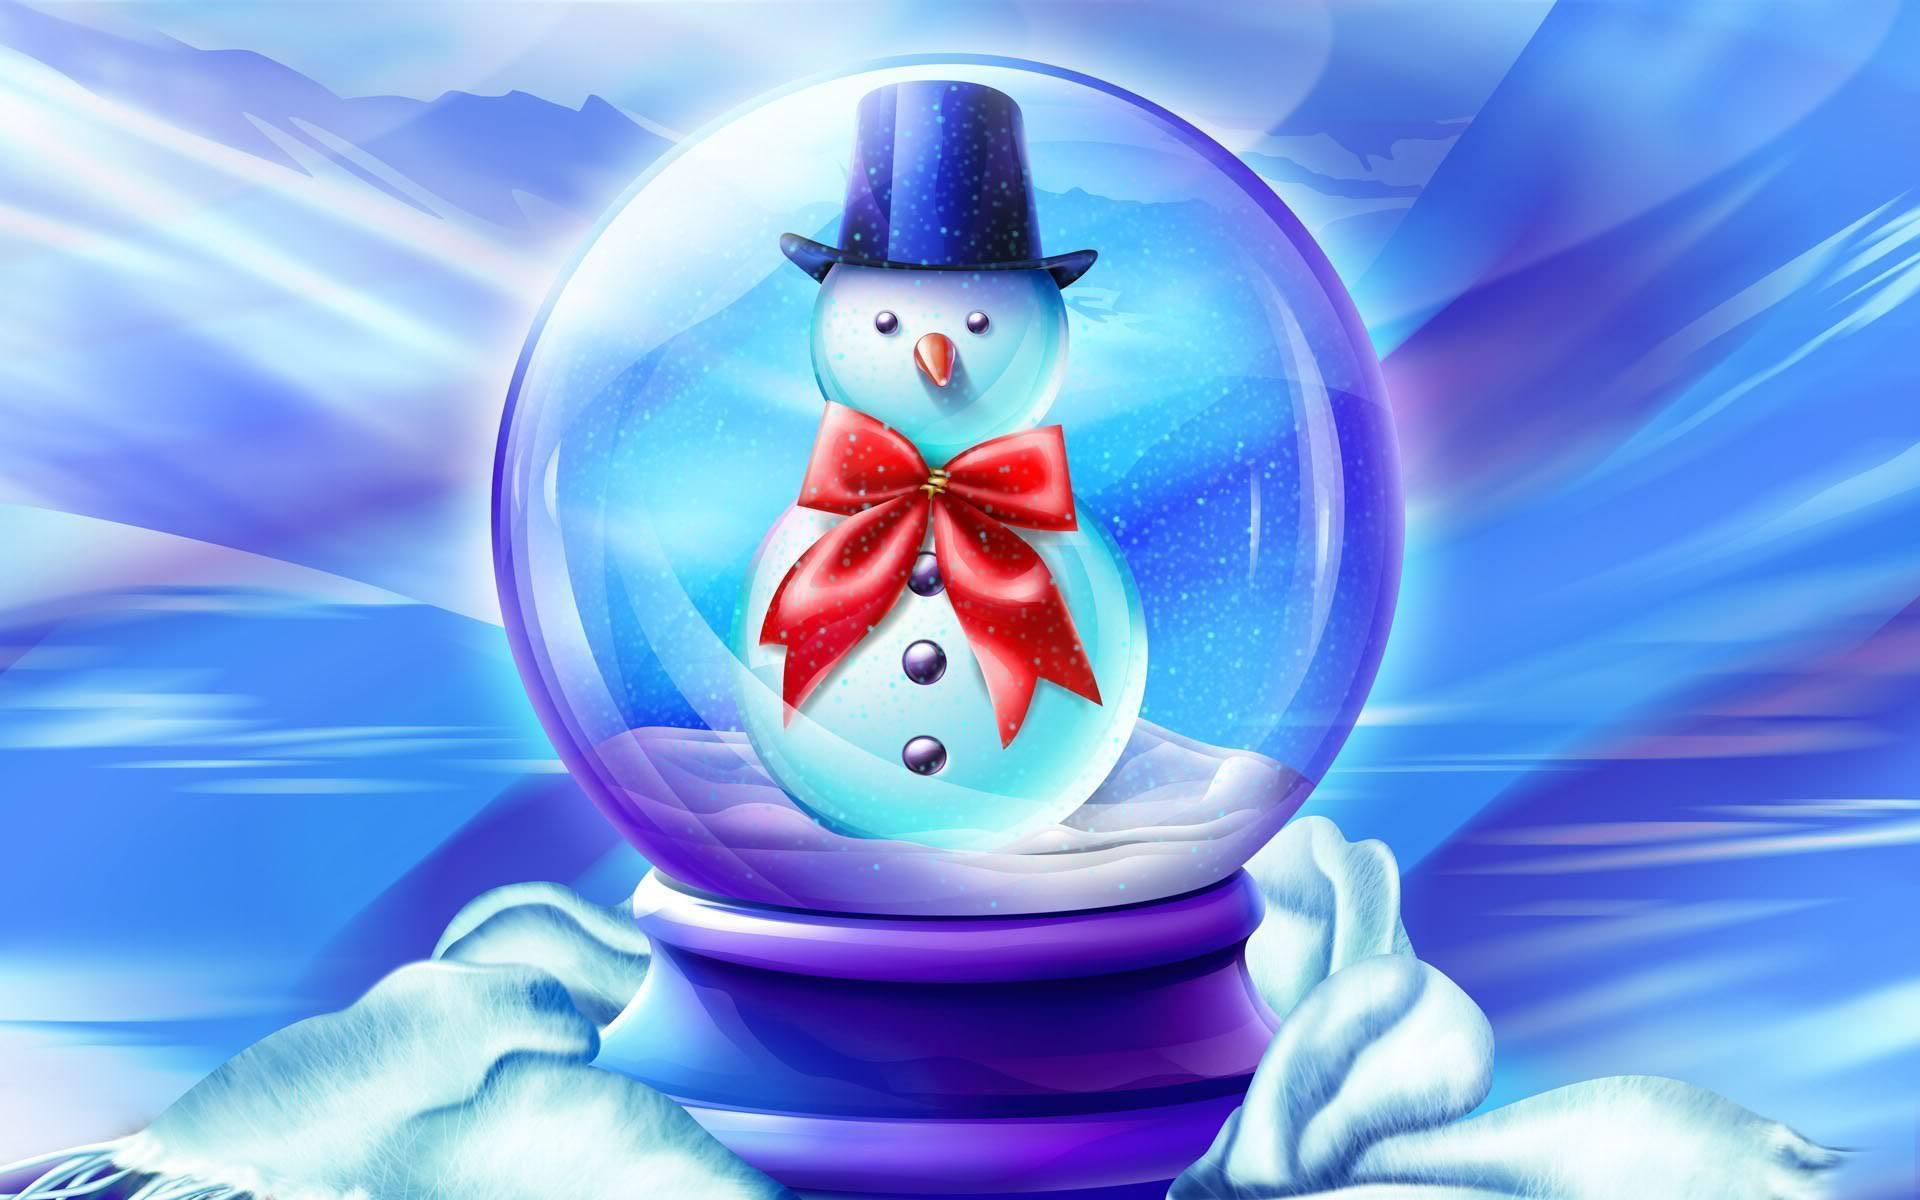 Snowman music box free desktop background wallpaper image